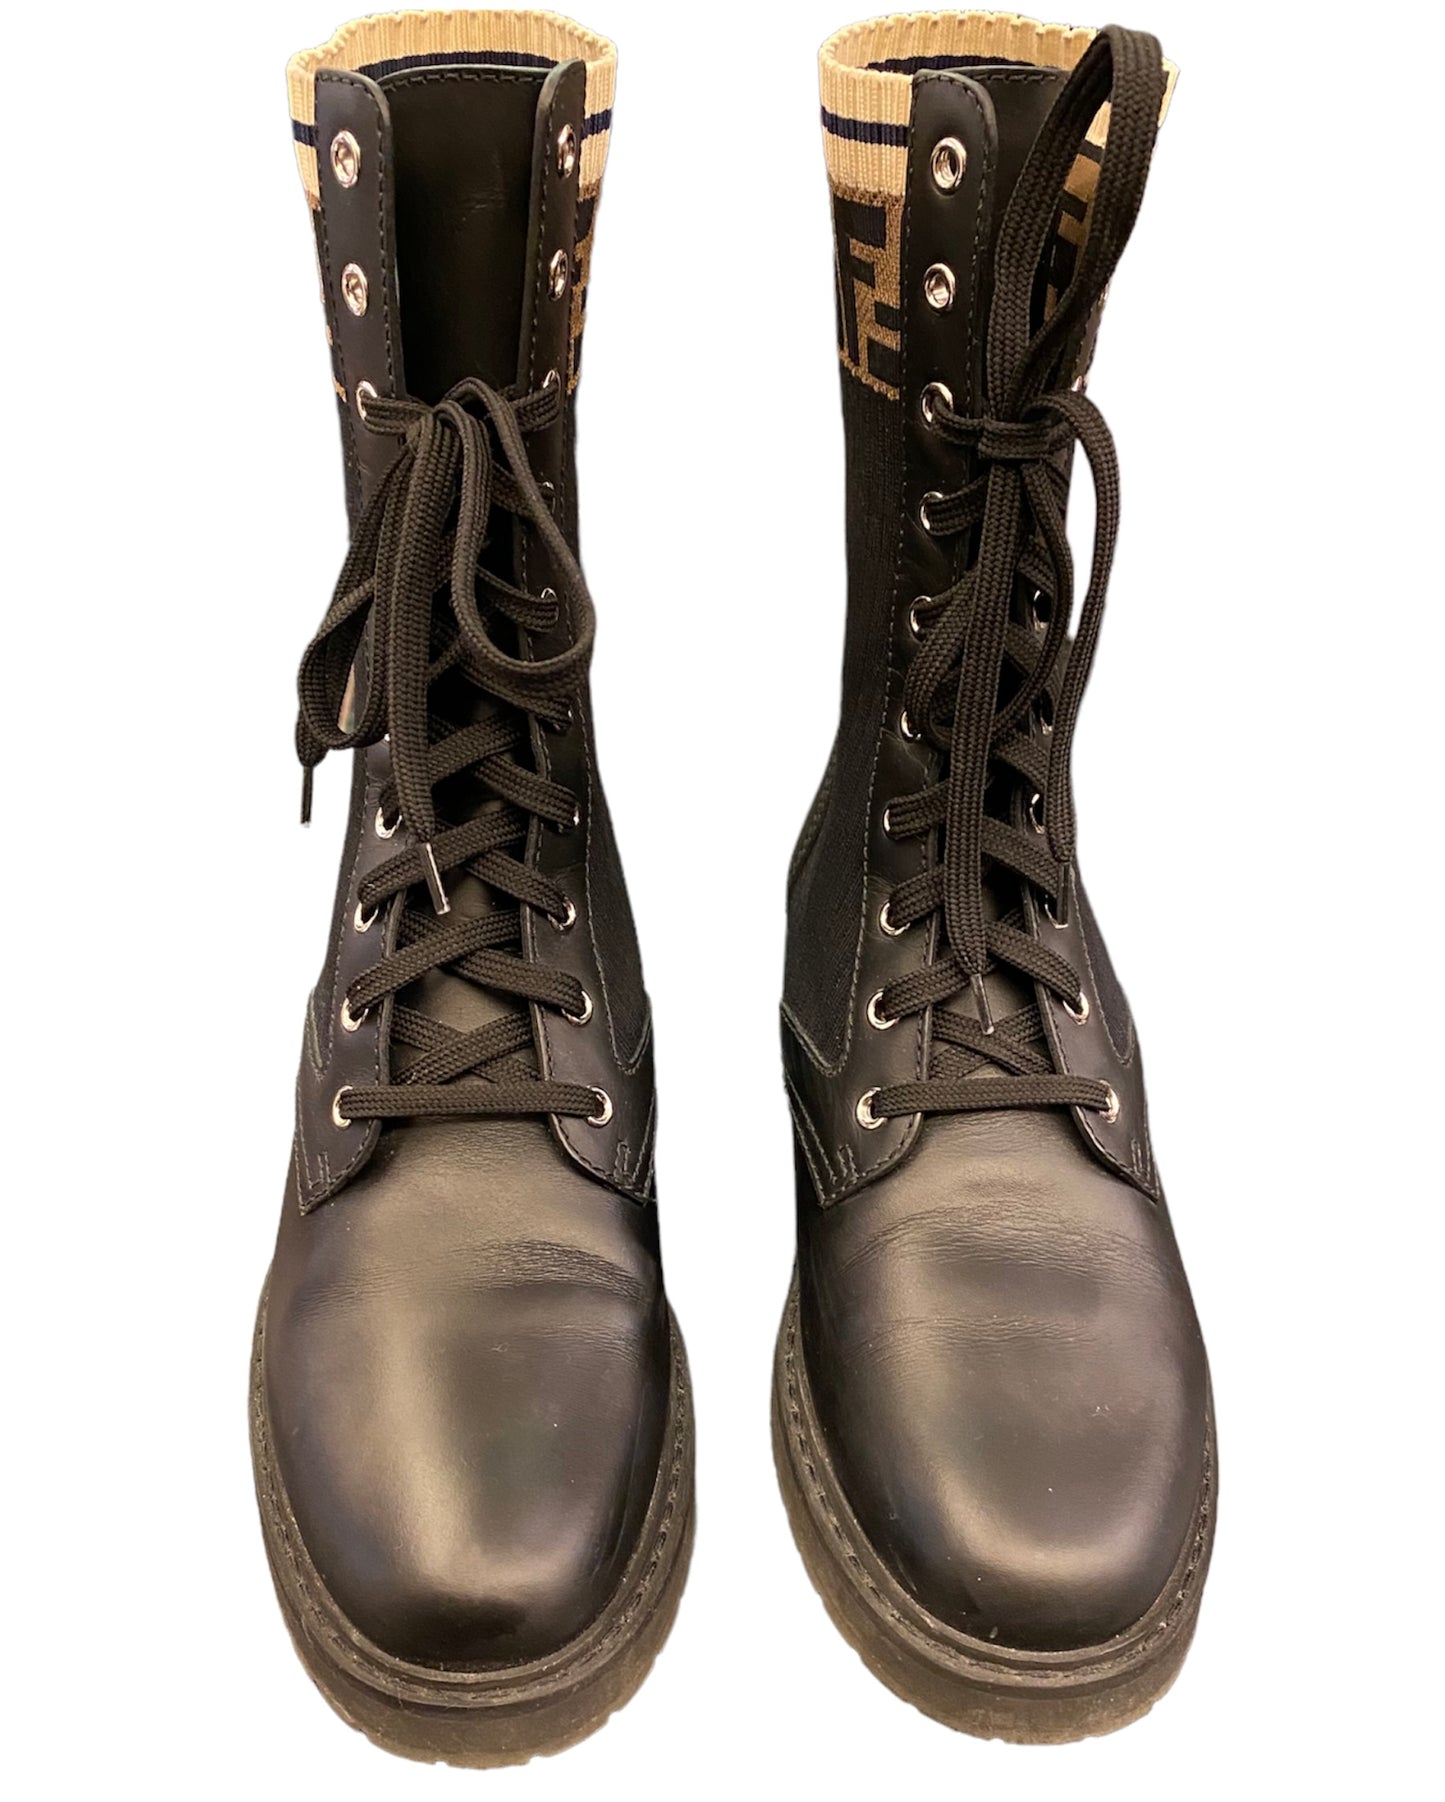 FENDI Leather Boots Size 39